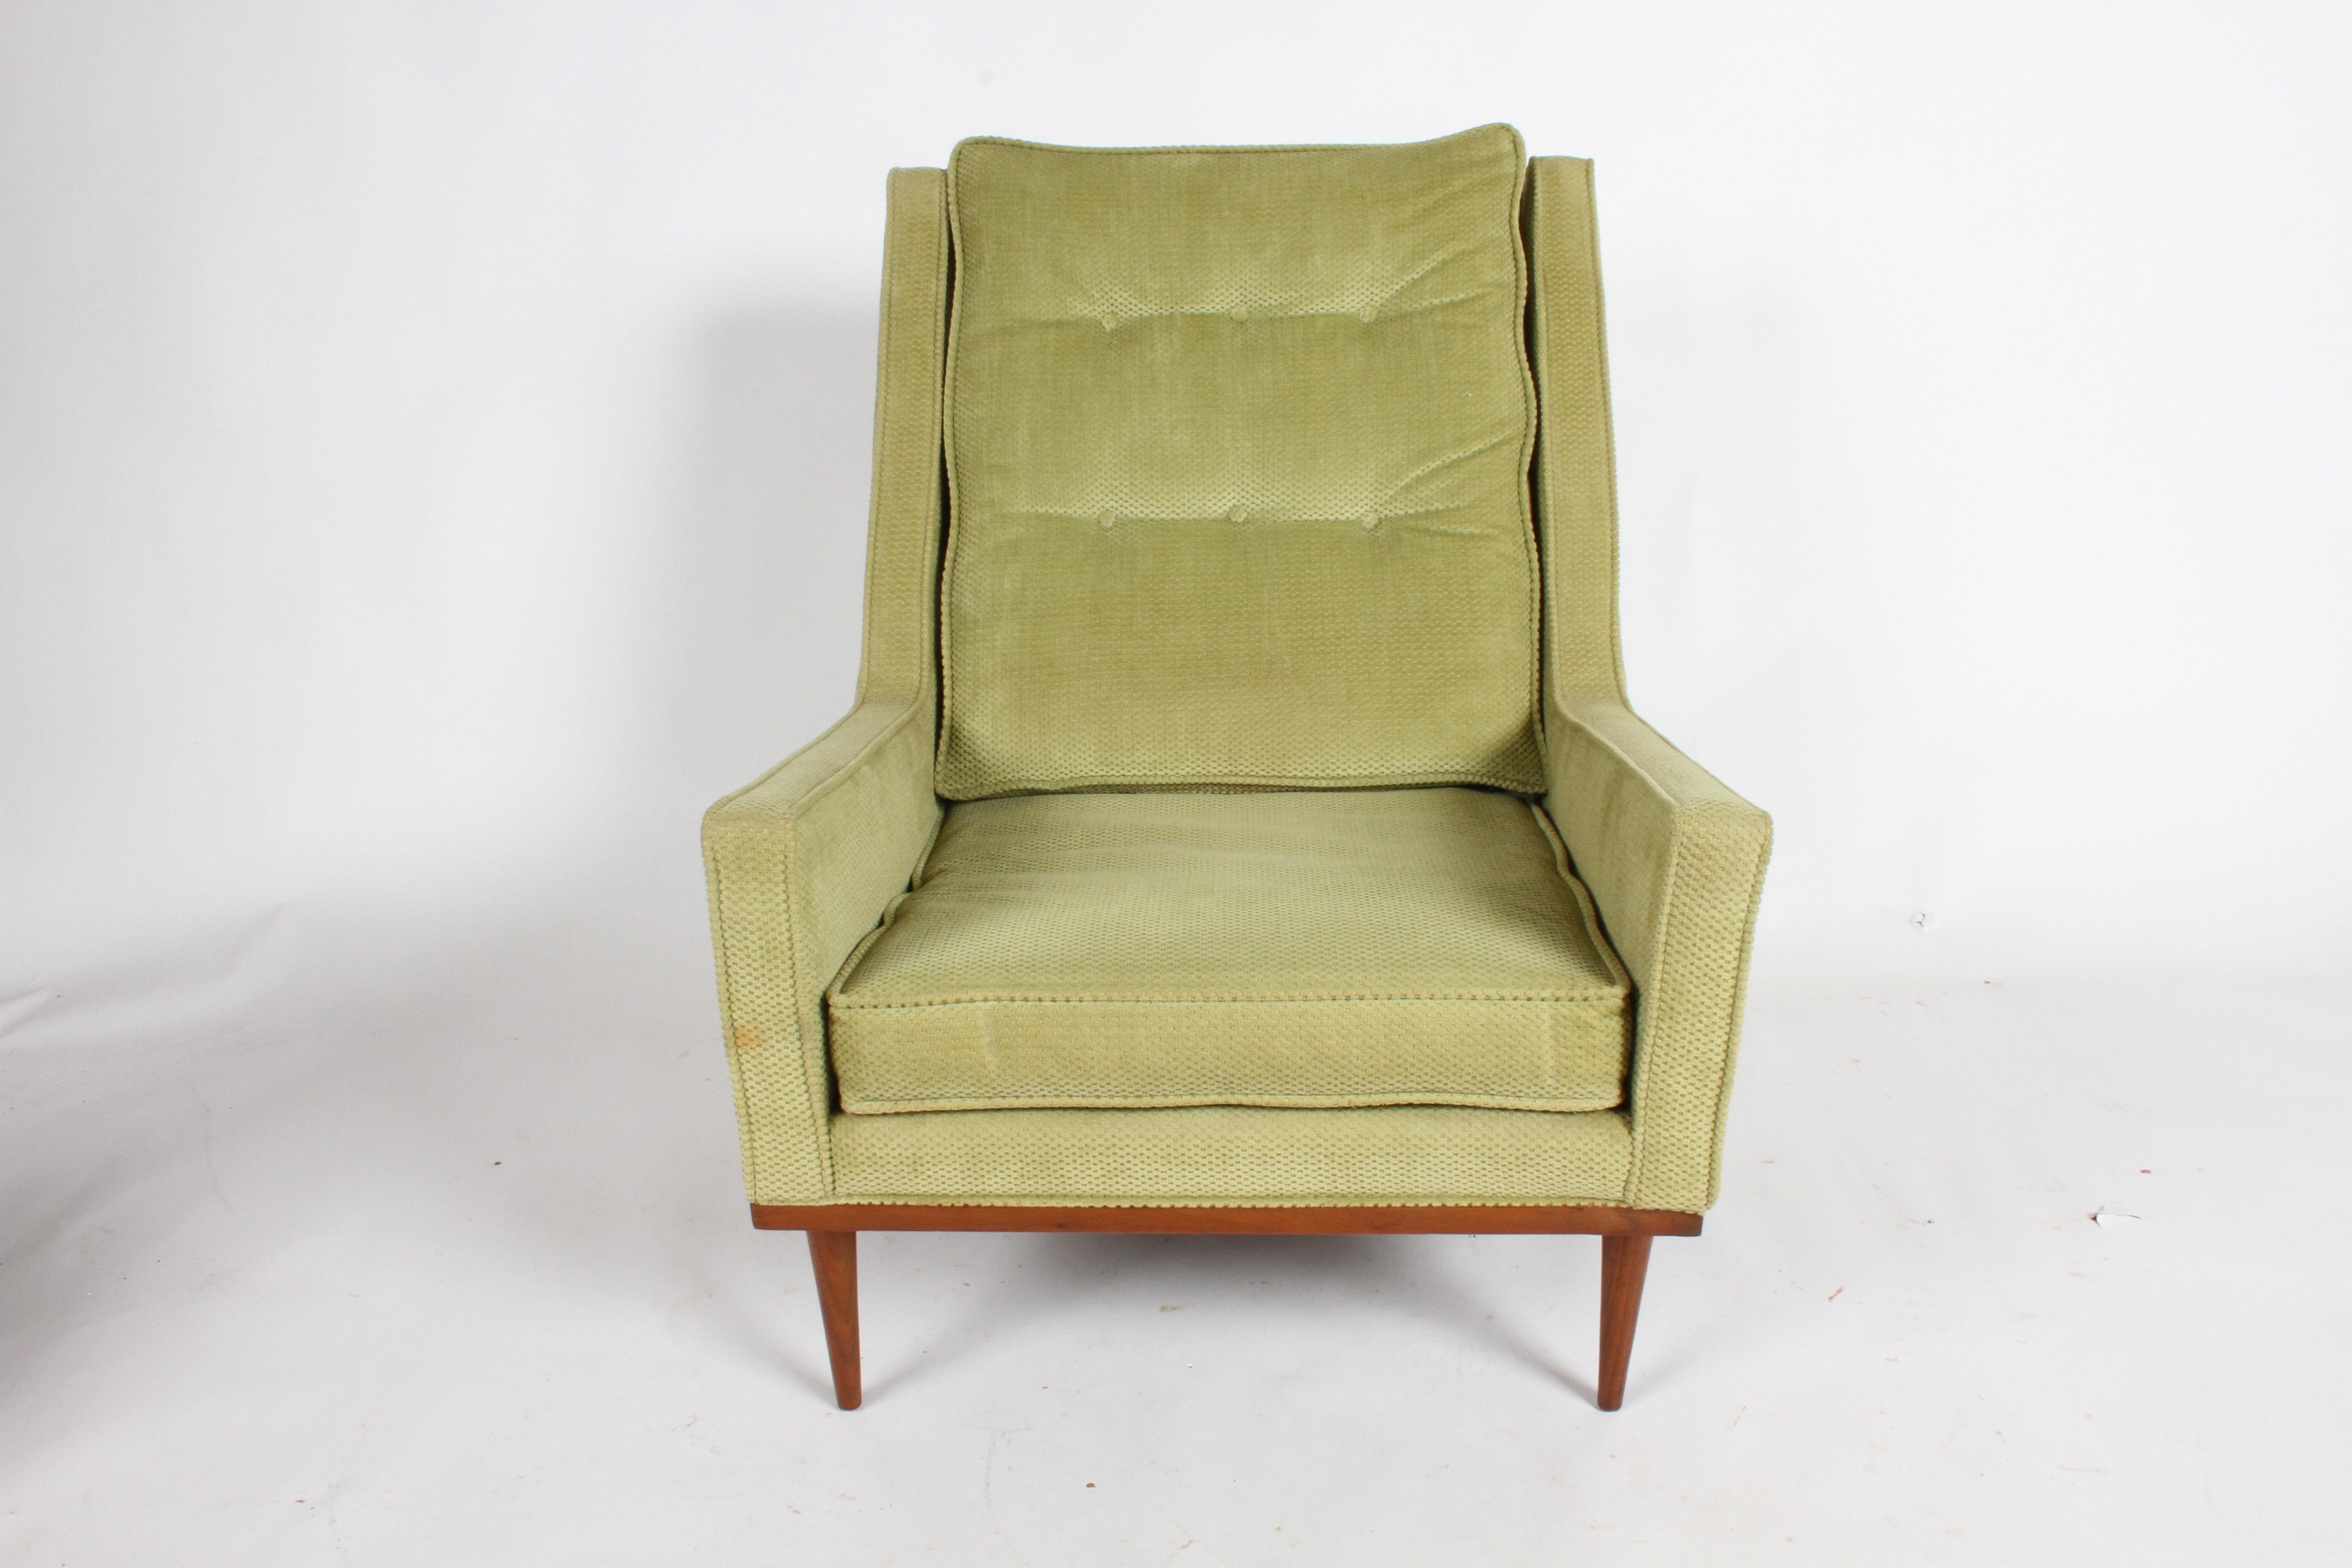 Upholstery Milo Baughman for James Inc. Lounge Chair